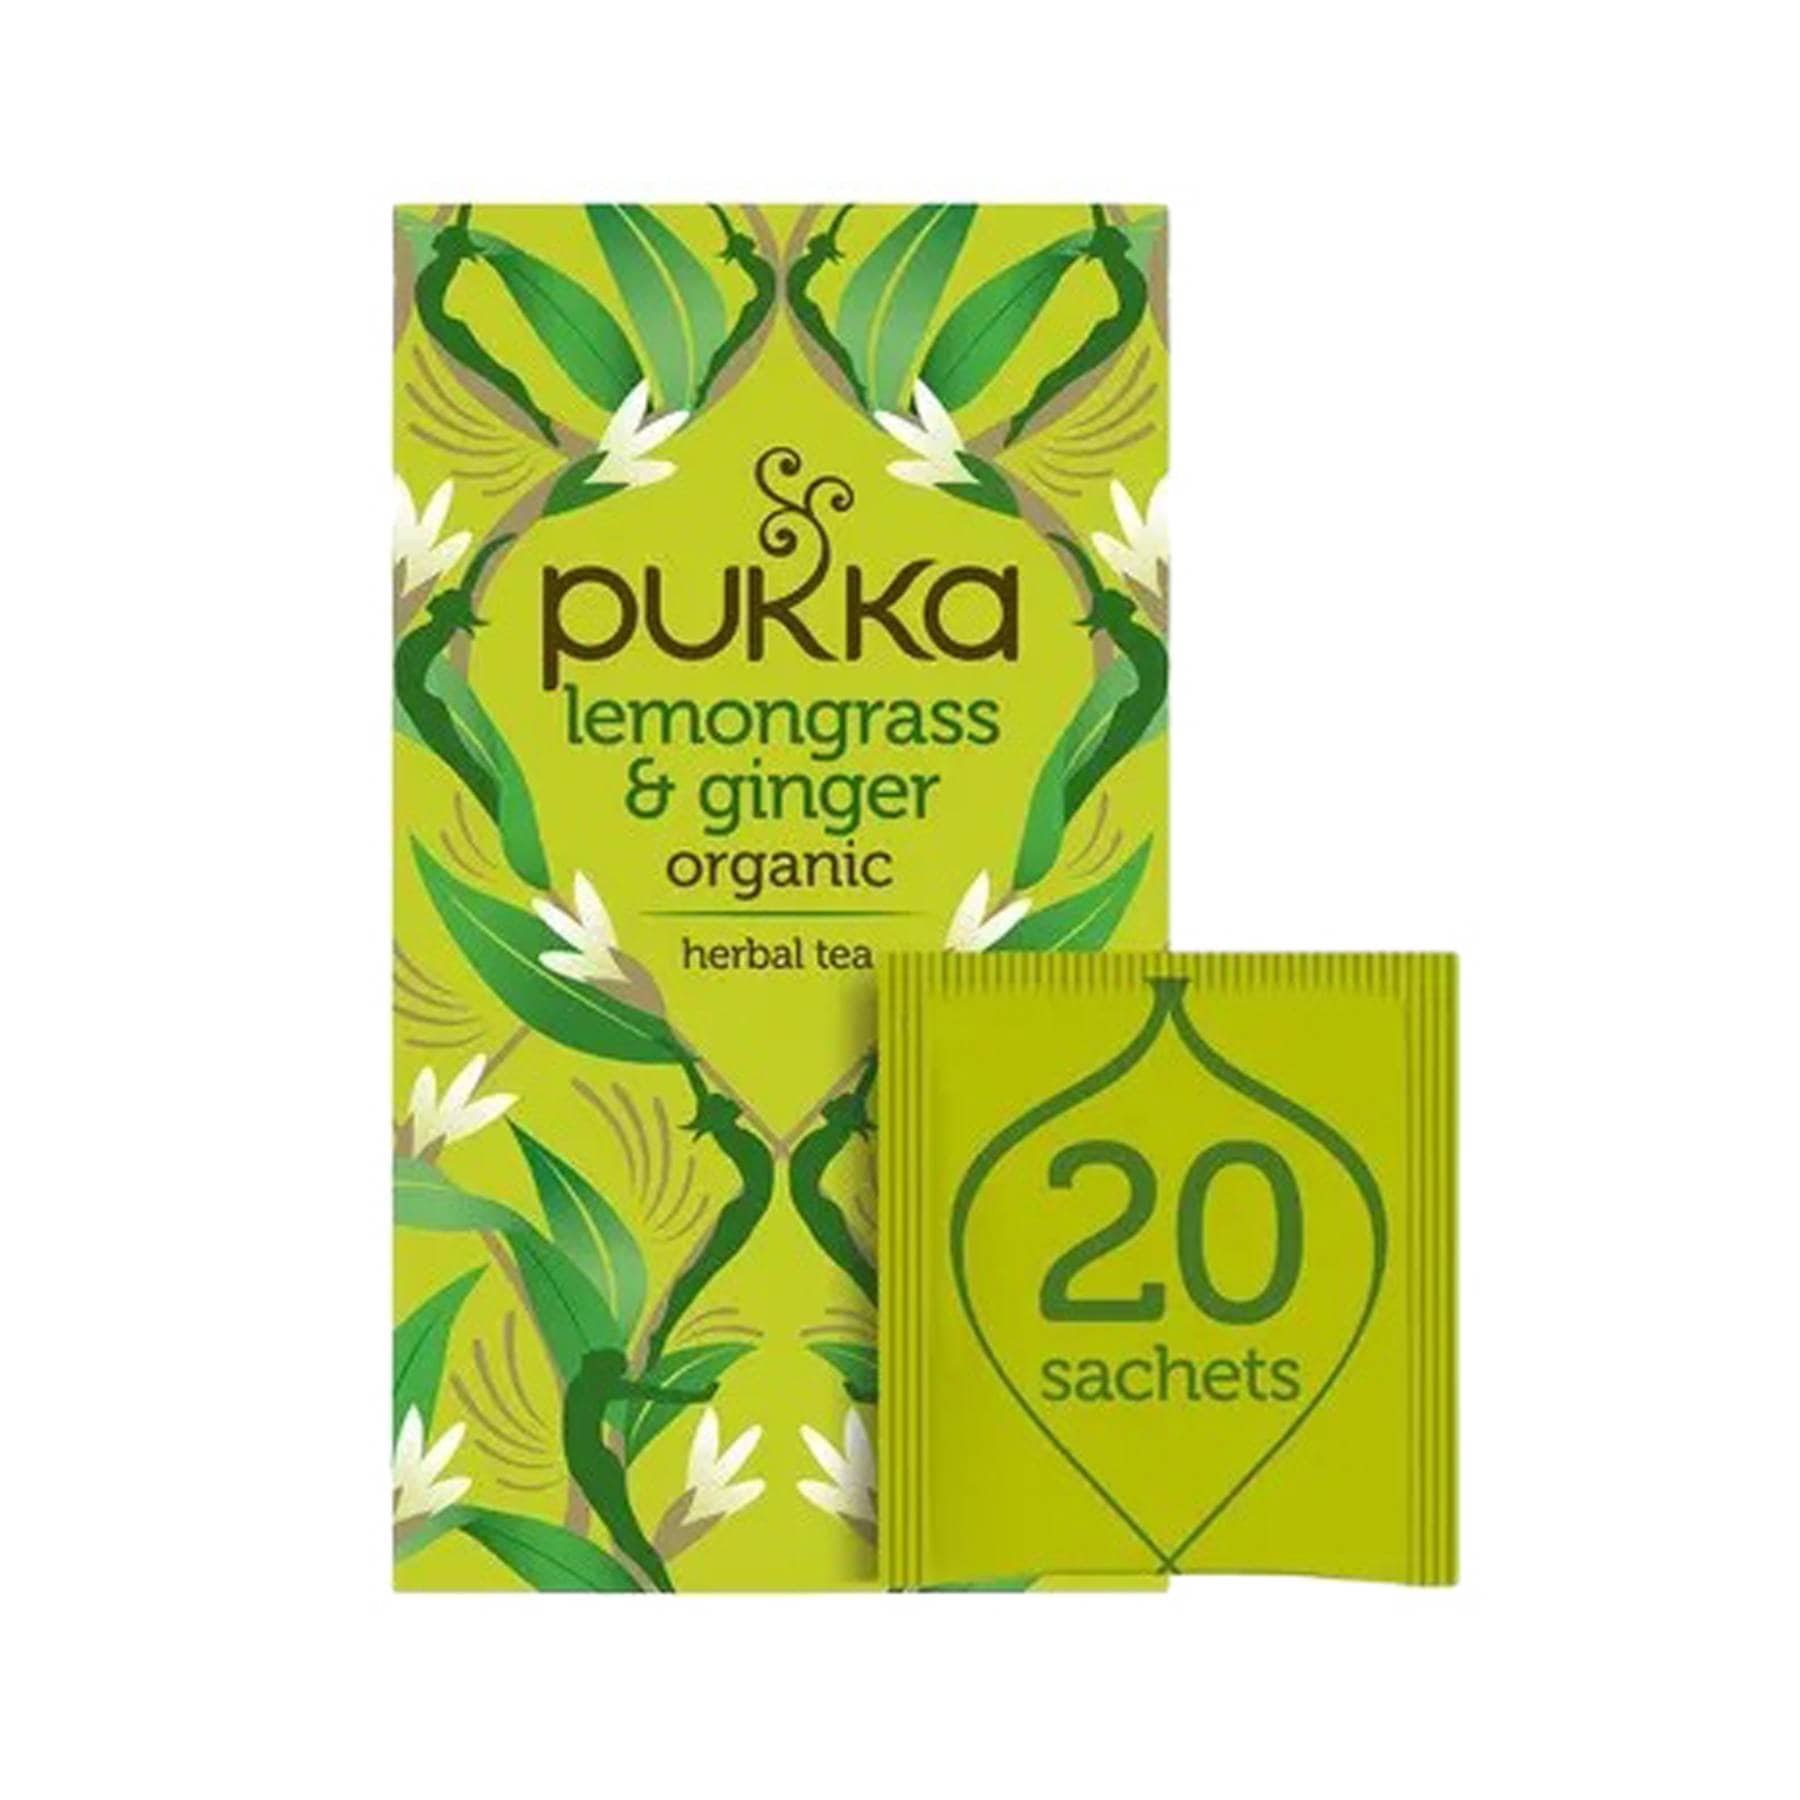 Pukka lemongrass & ginger 20 tea bags